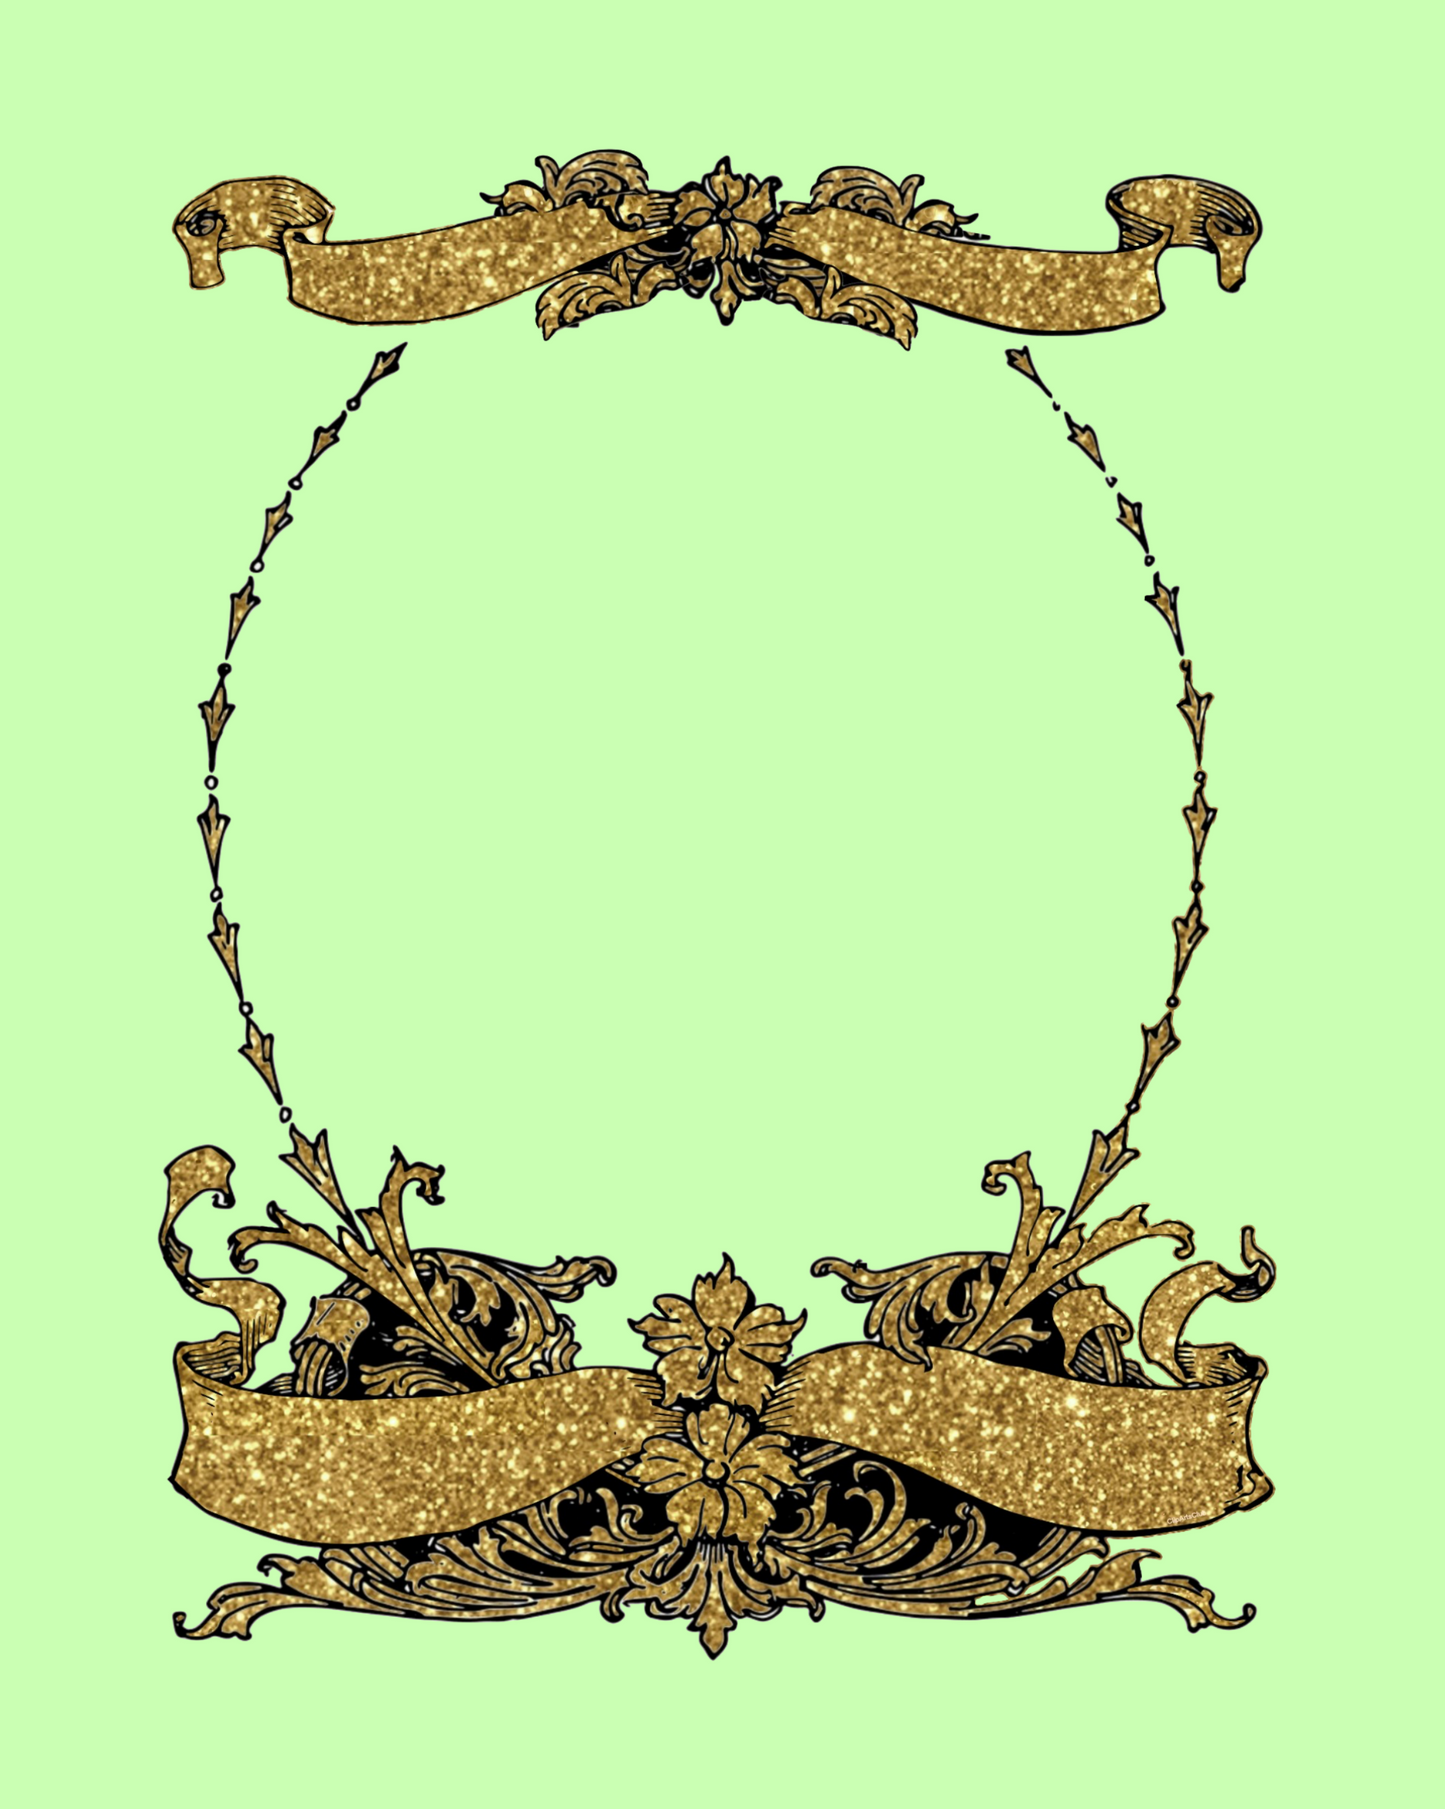 Gold Glitter Baroque Ornate Frame - Green Background 8x10